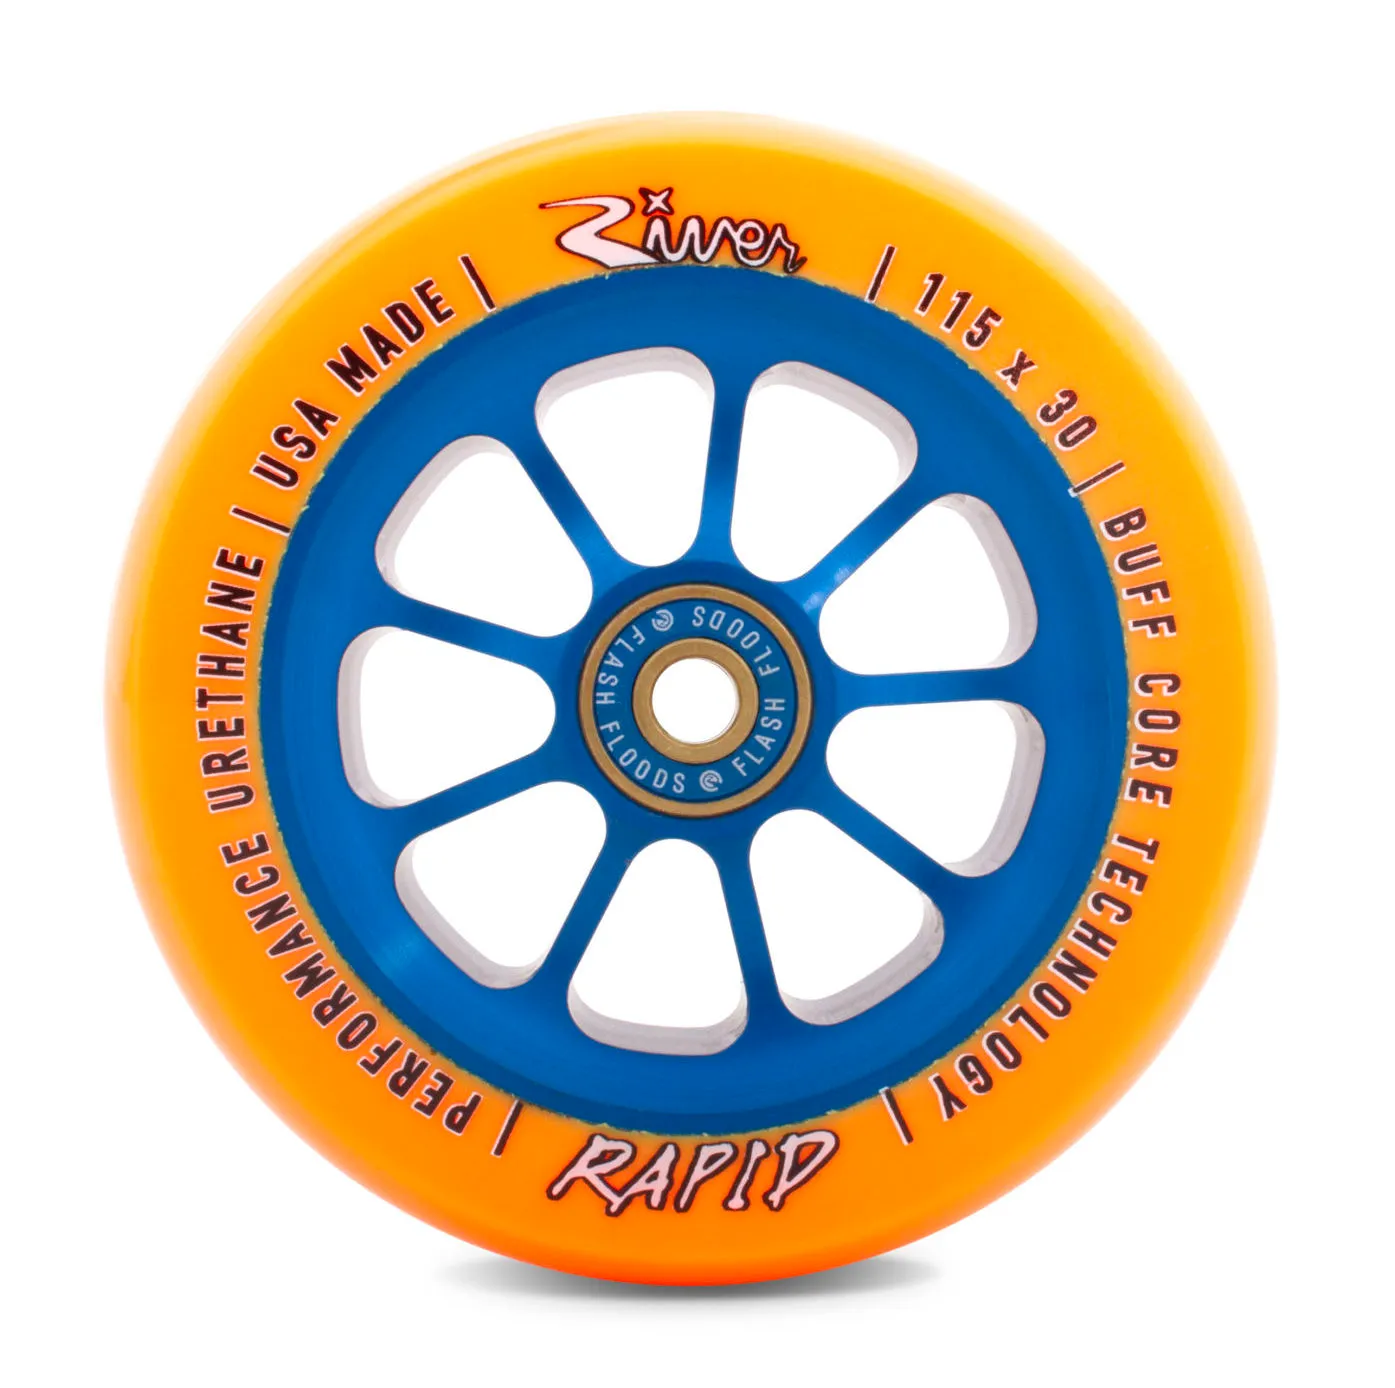 River Wheel Co - "Sunfire" Rapid 115x30mm (Orange on Blue)